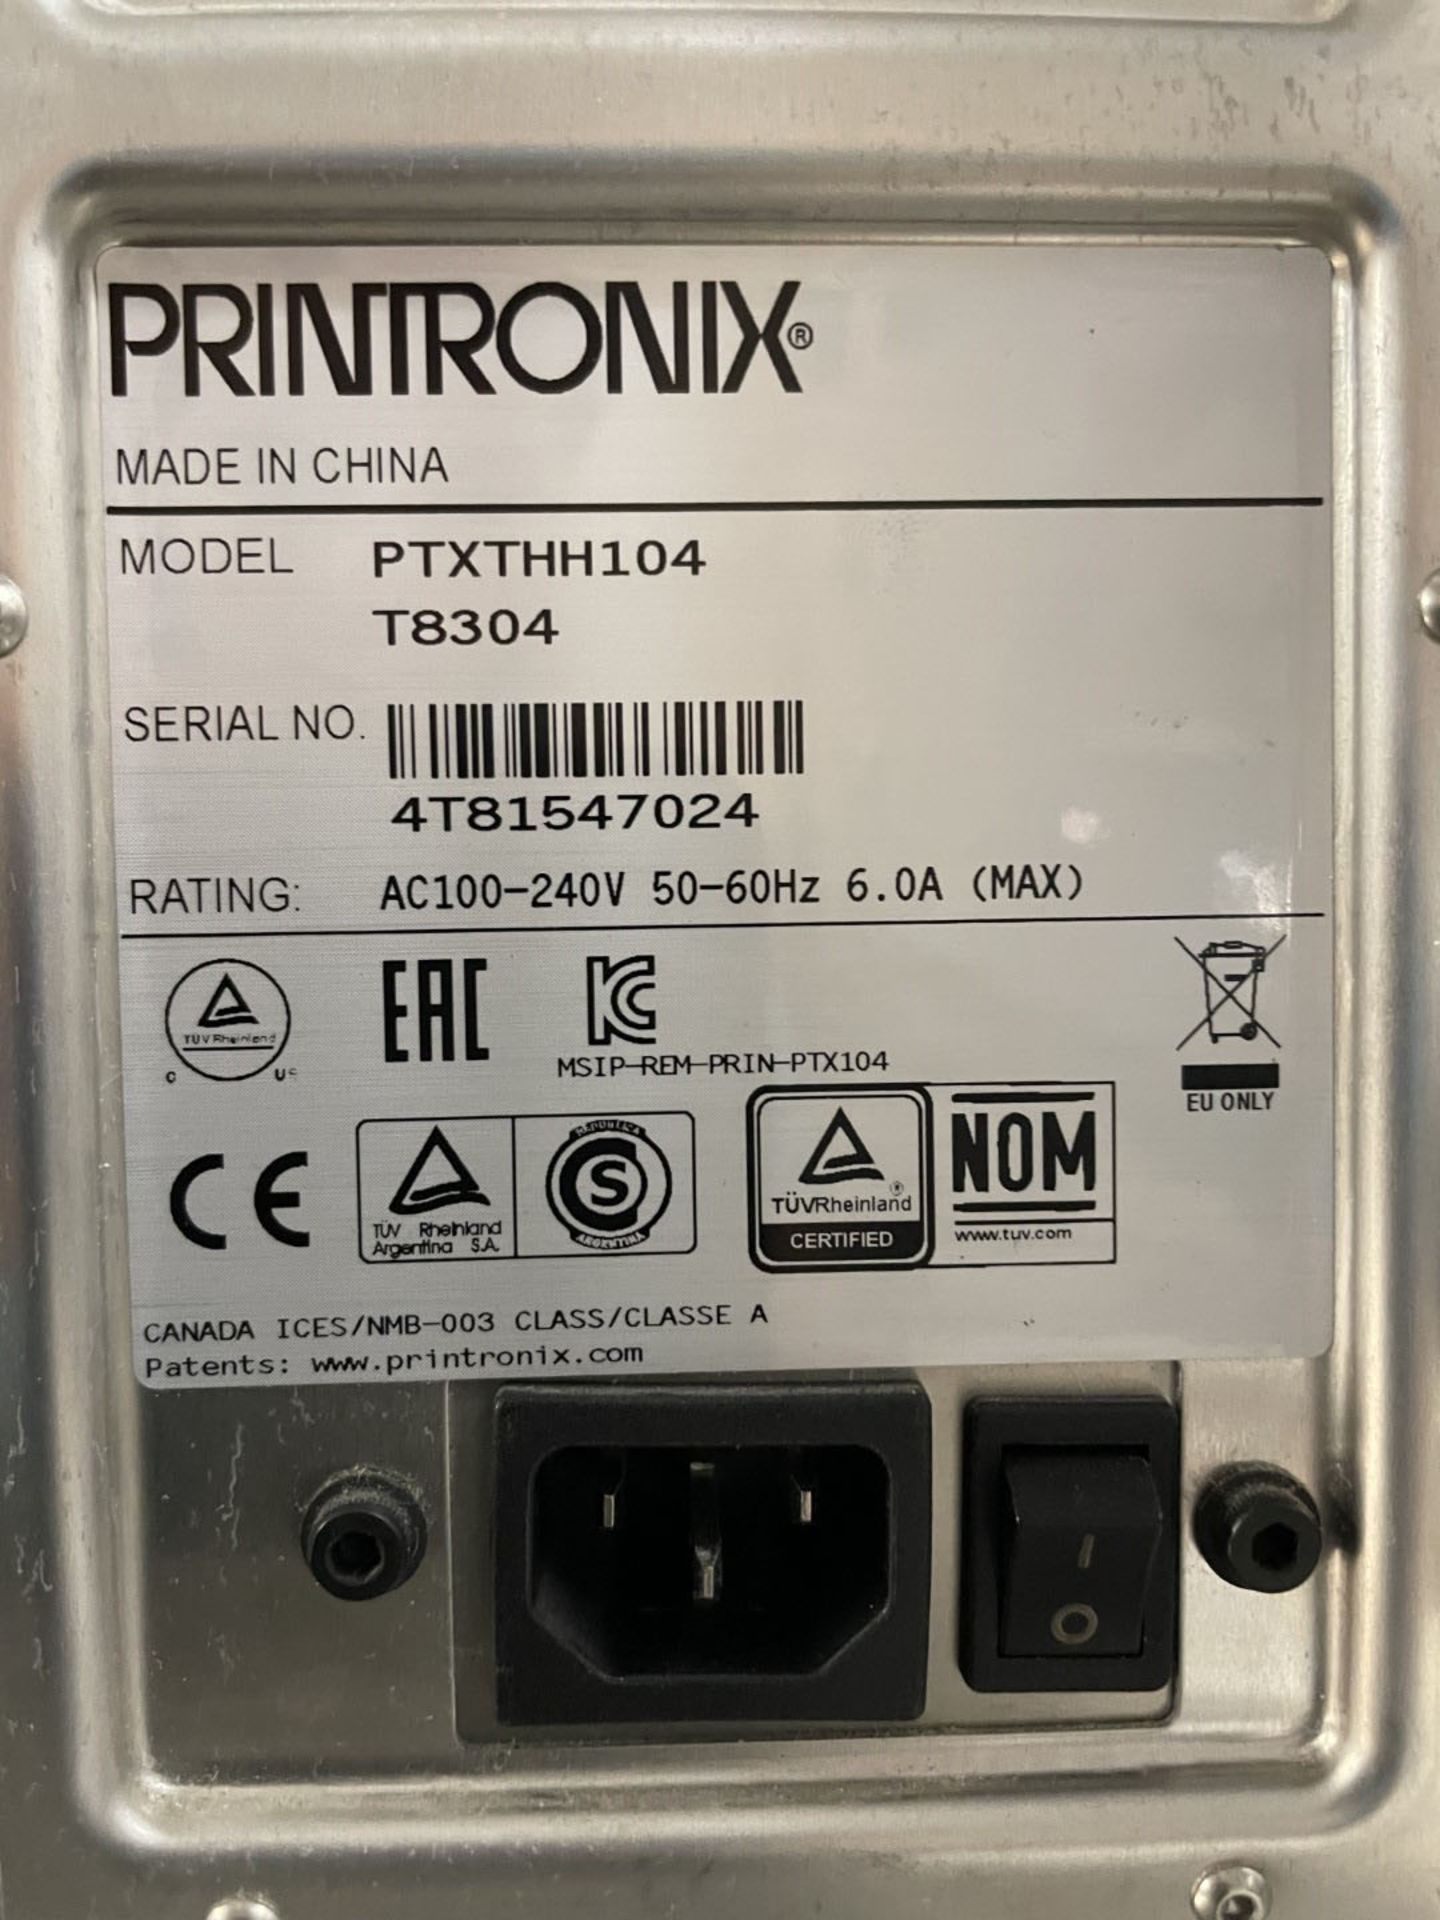 Printronix thermal printer - Image 3 of 12